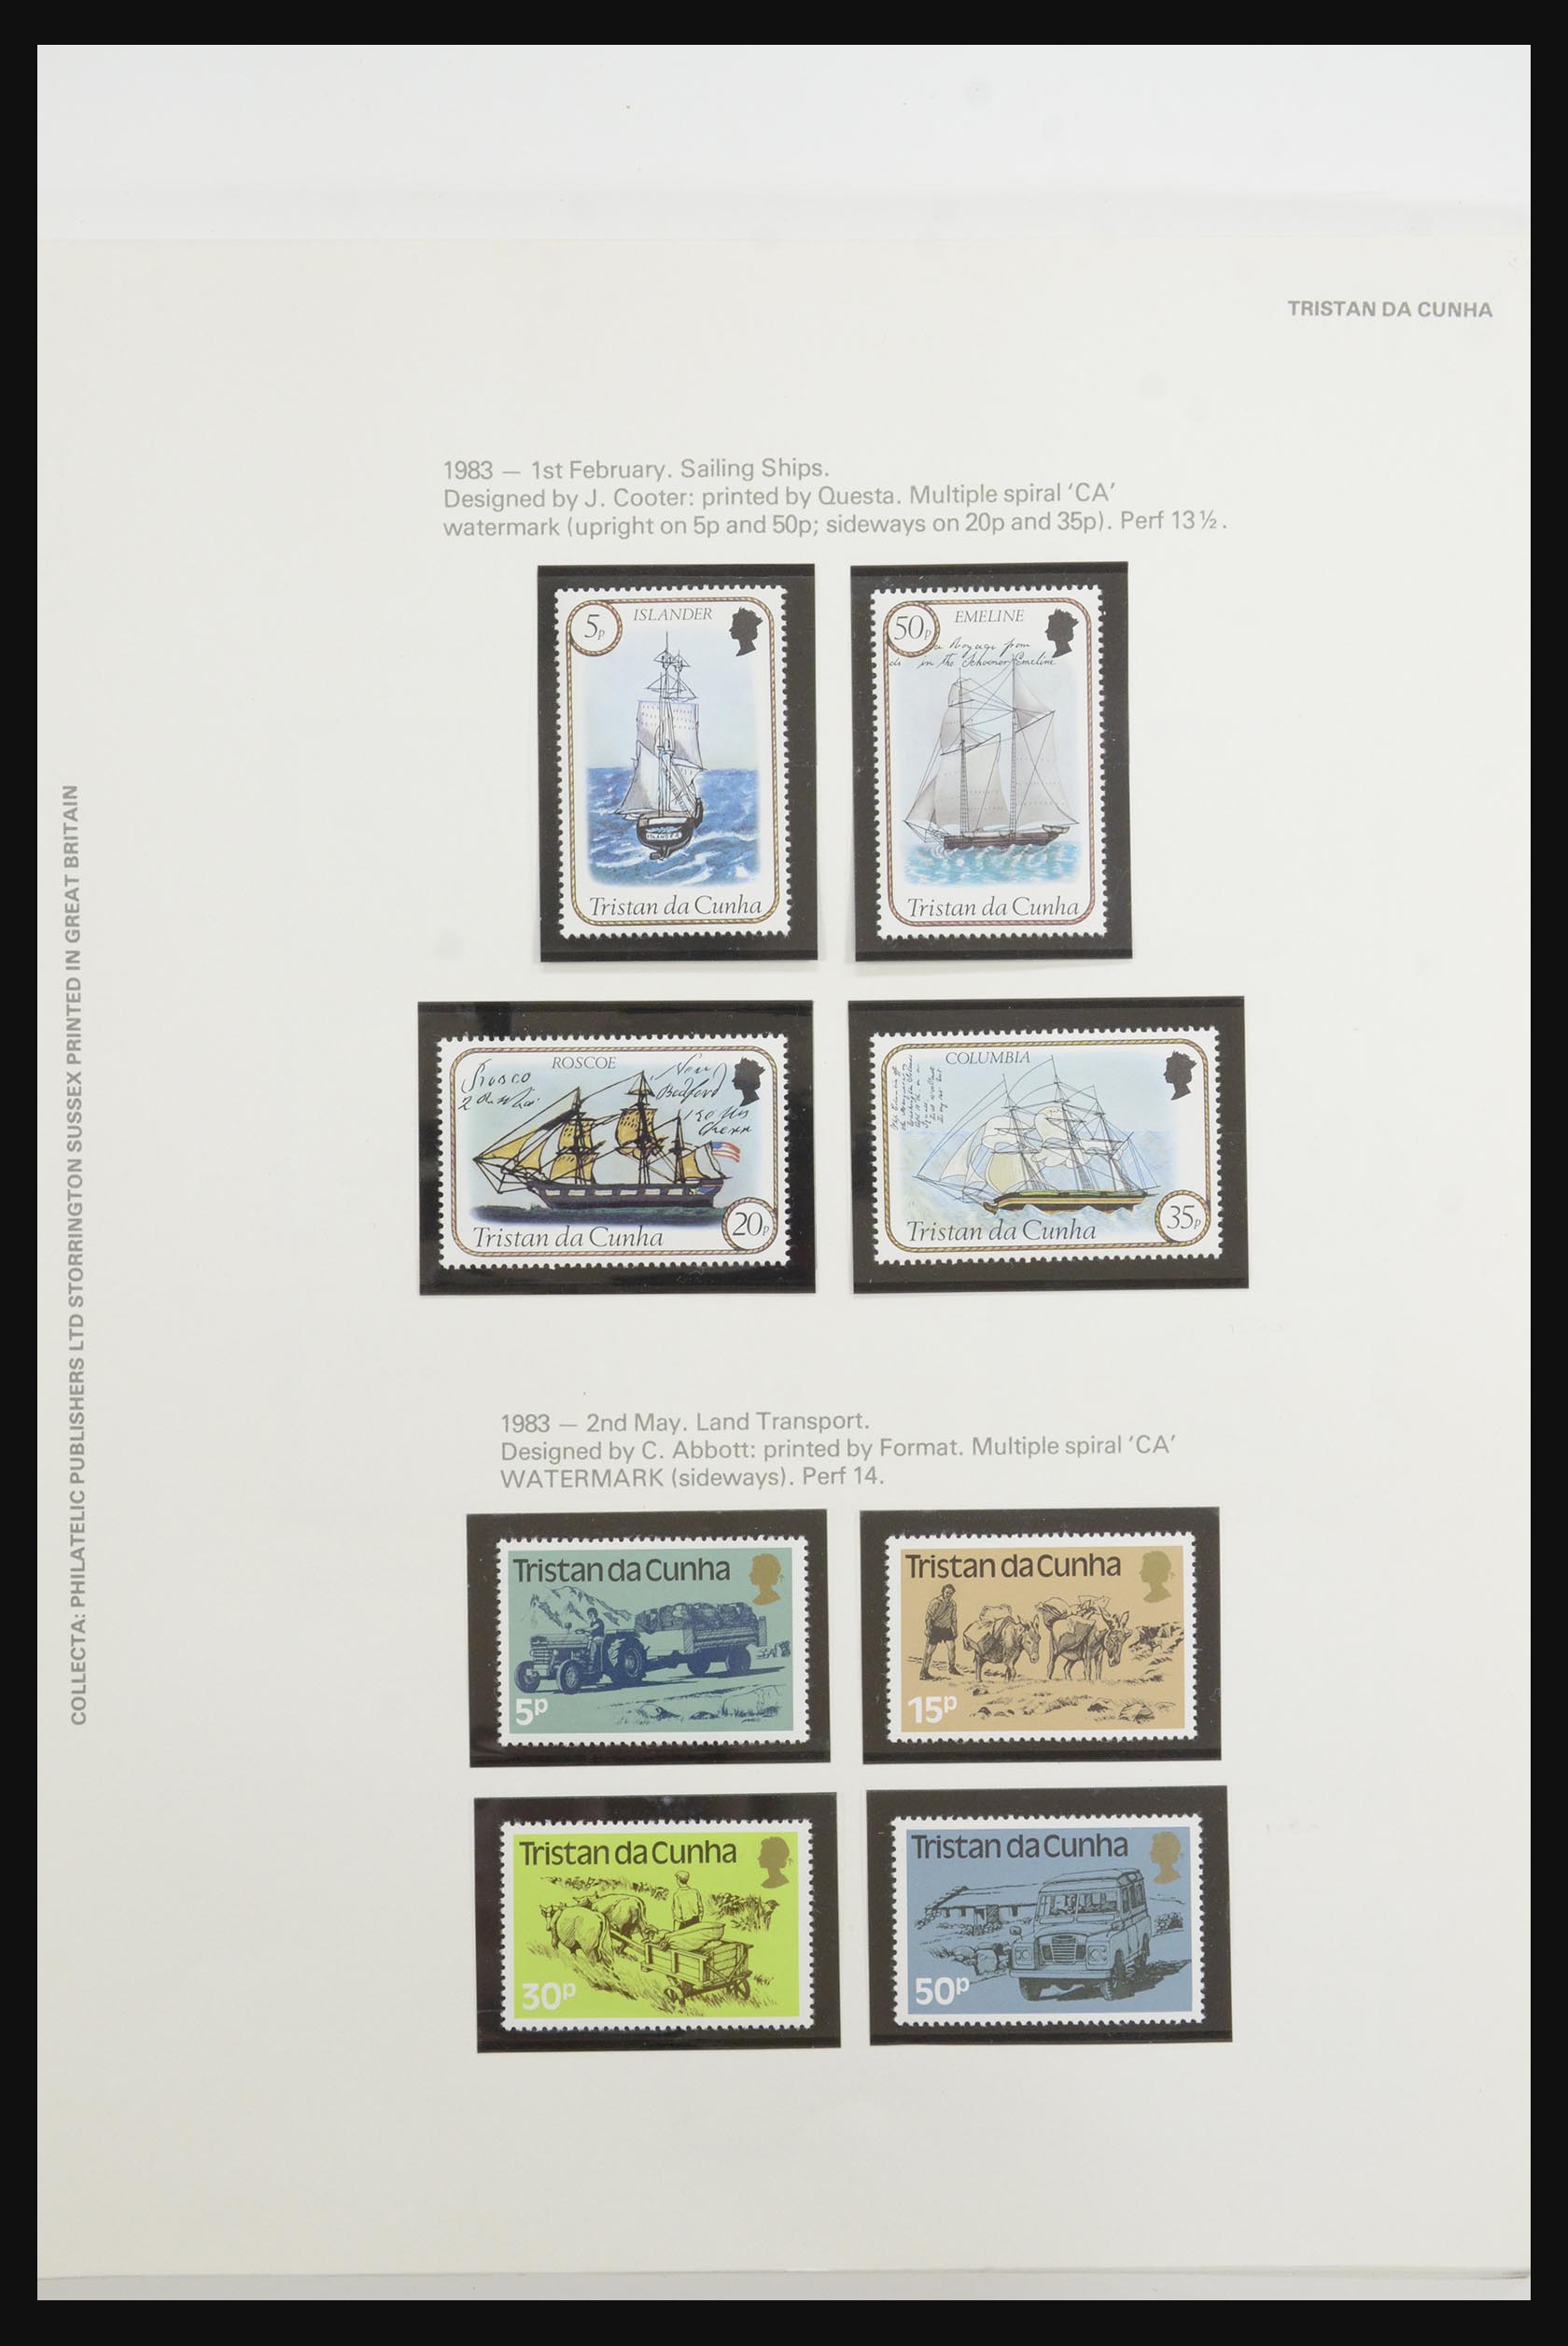 31659 111 - 31659 Motief: Antarctica en Arctica 1880-1998.